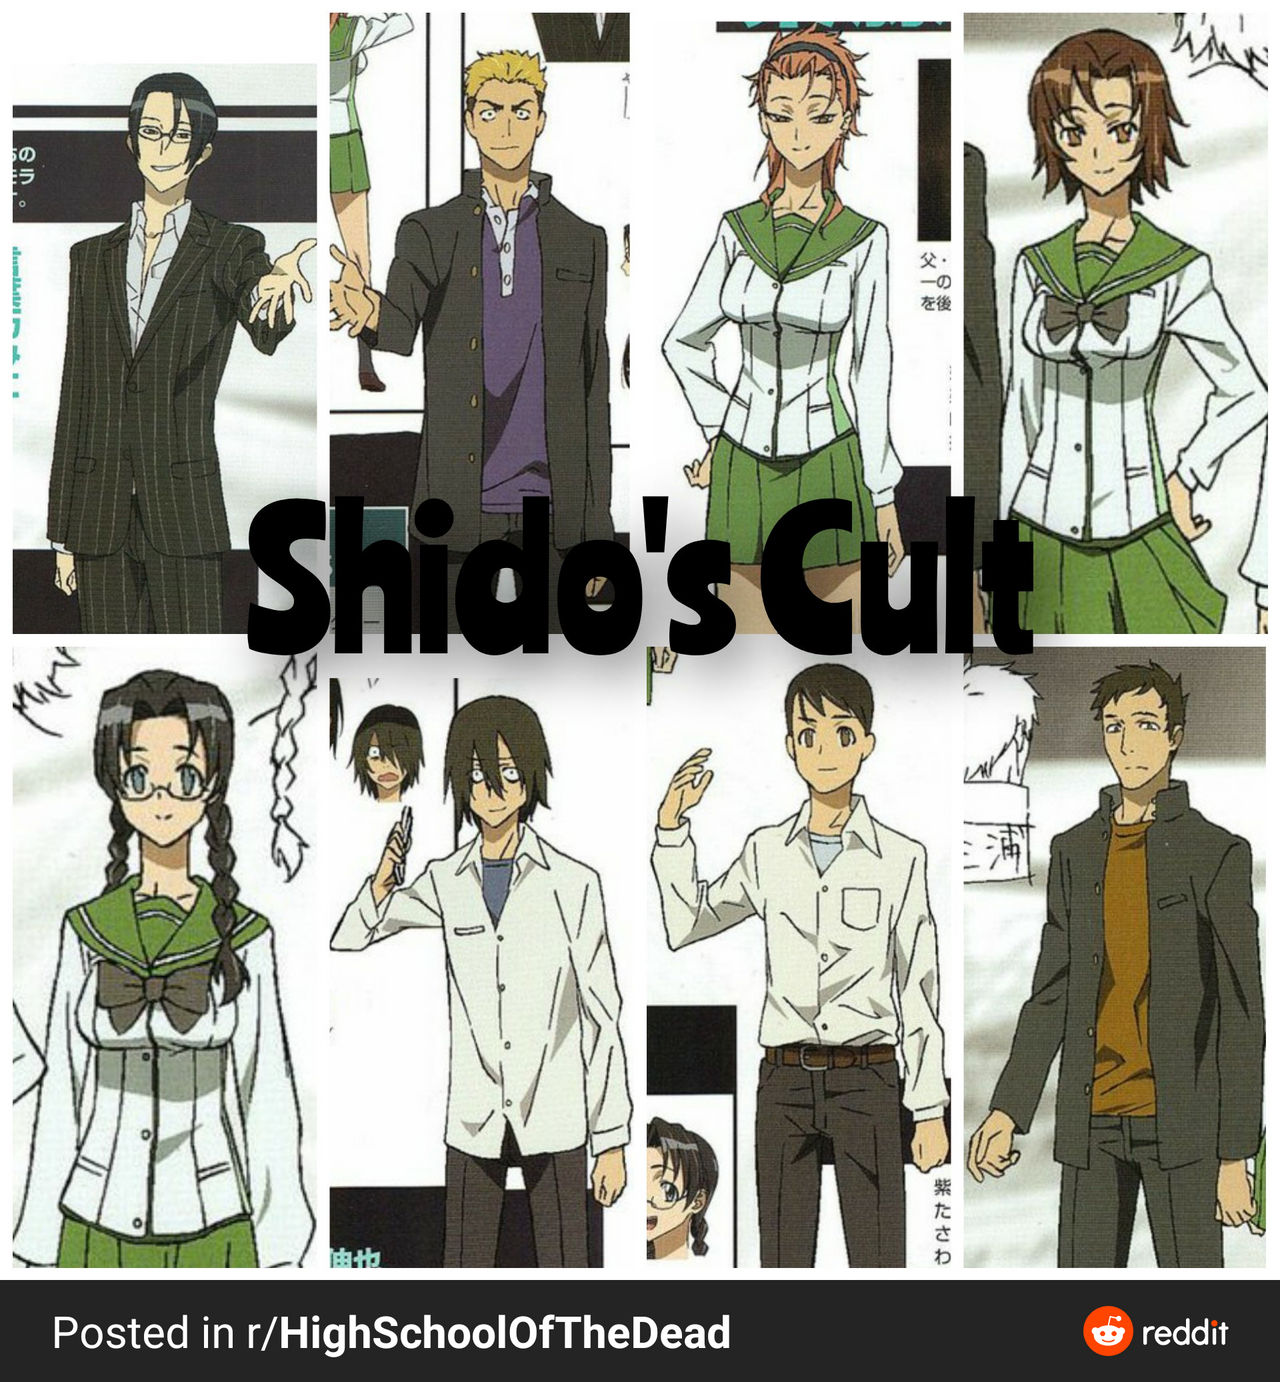 Shido's Cult from the anime by TakashiXHarem2000 on DeviantArt